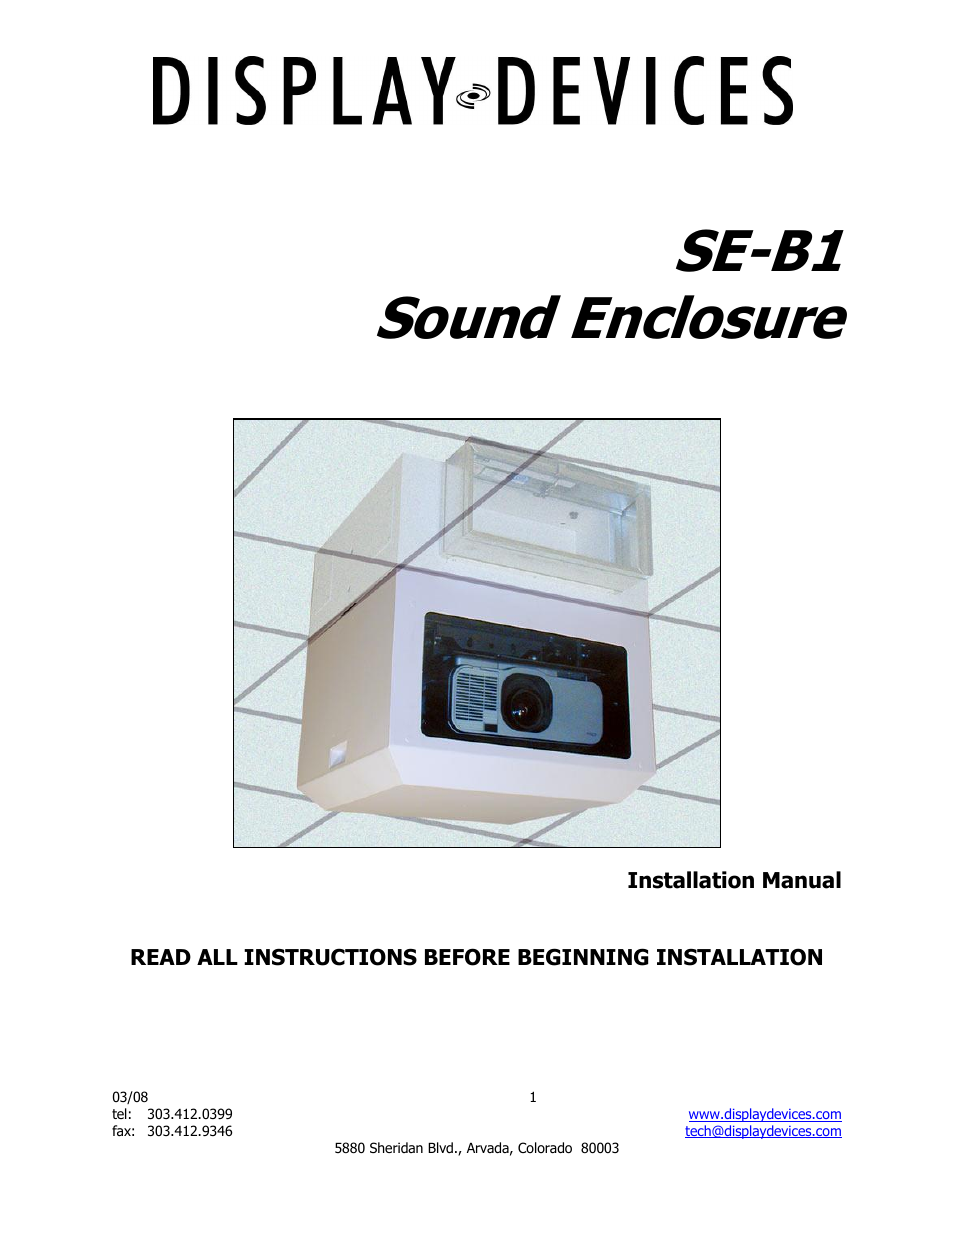 SE-B1 Series Projector Sound Enclosure